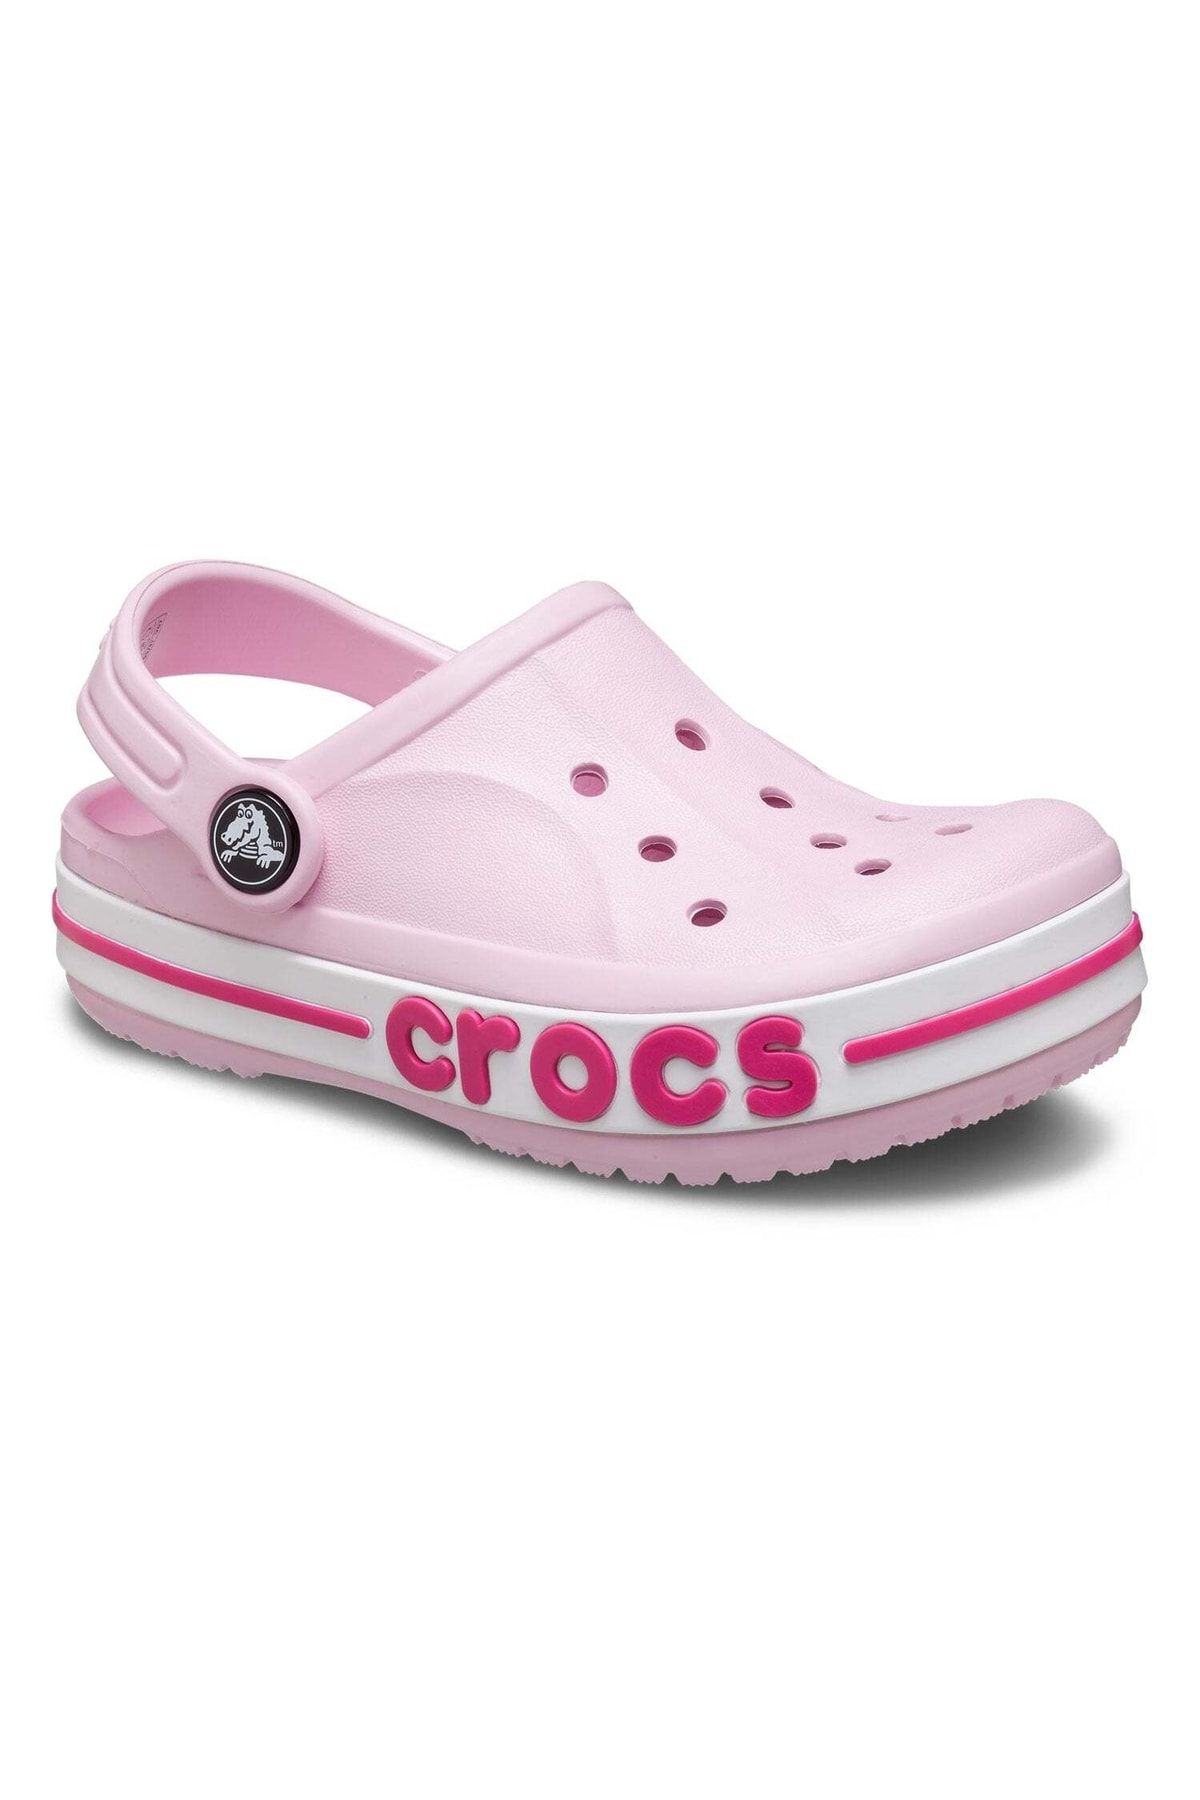 Crocs Terlik Bayaband Clog K Ballerine Pink 207019-6tg